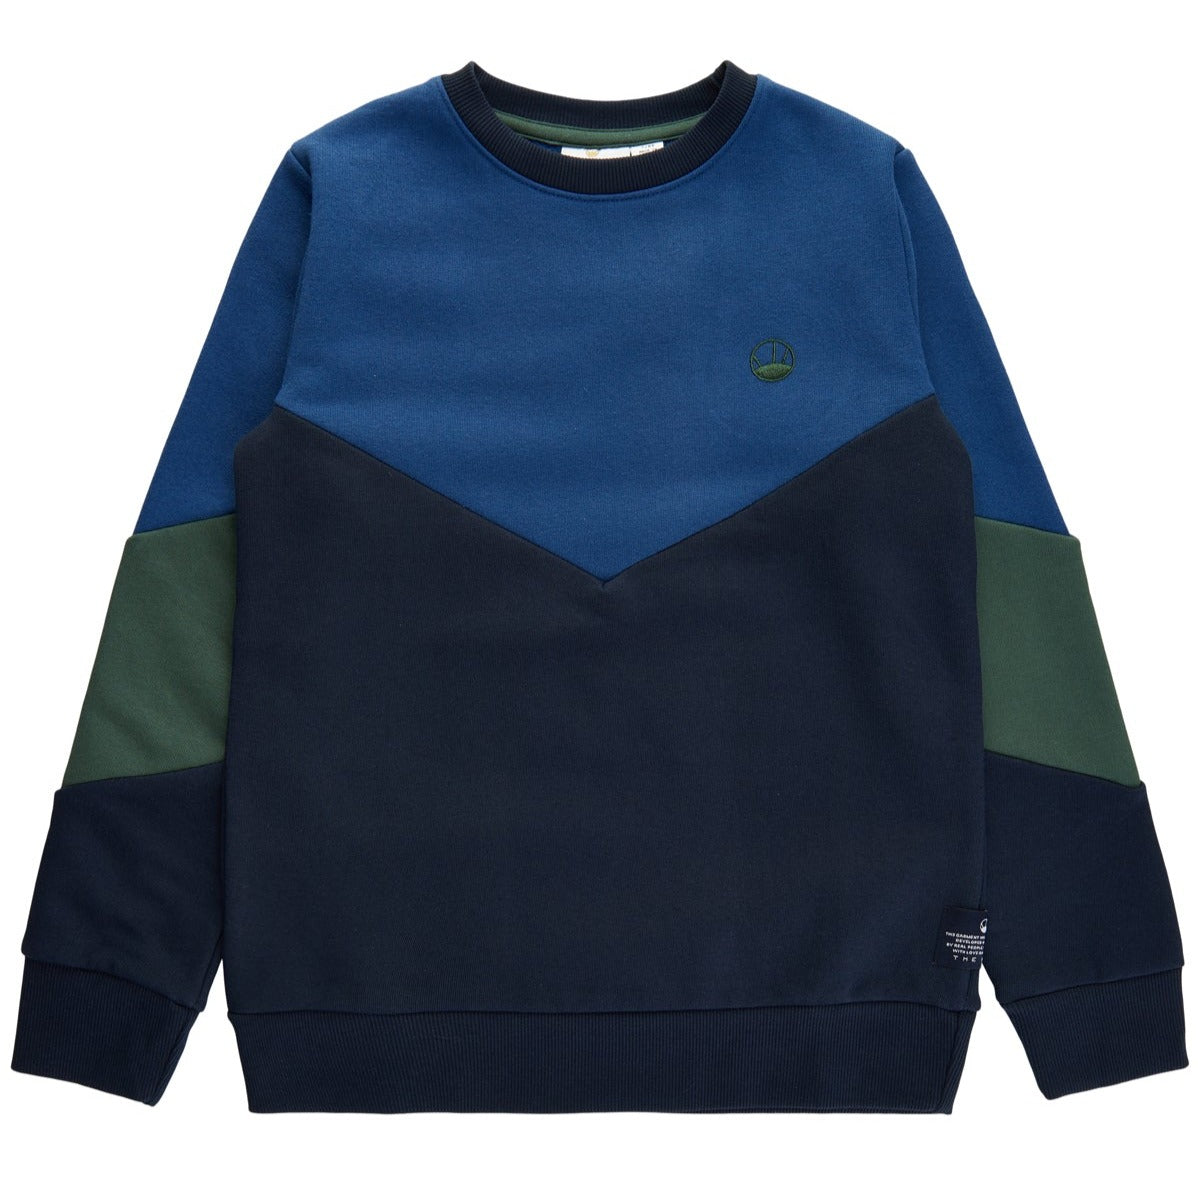 THE NEW - Dexter Sweatshirt (TN4379) - Navy Blazer